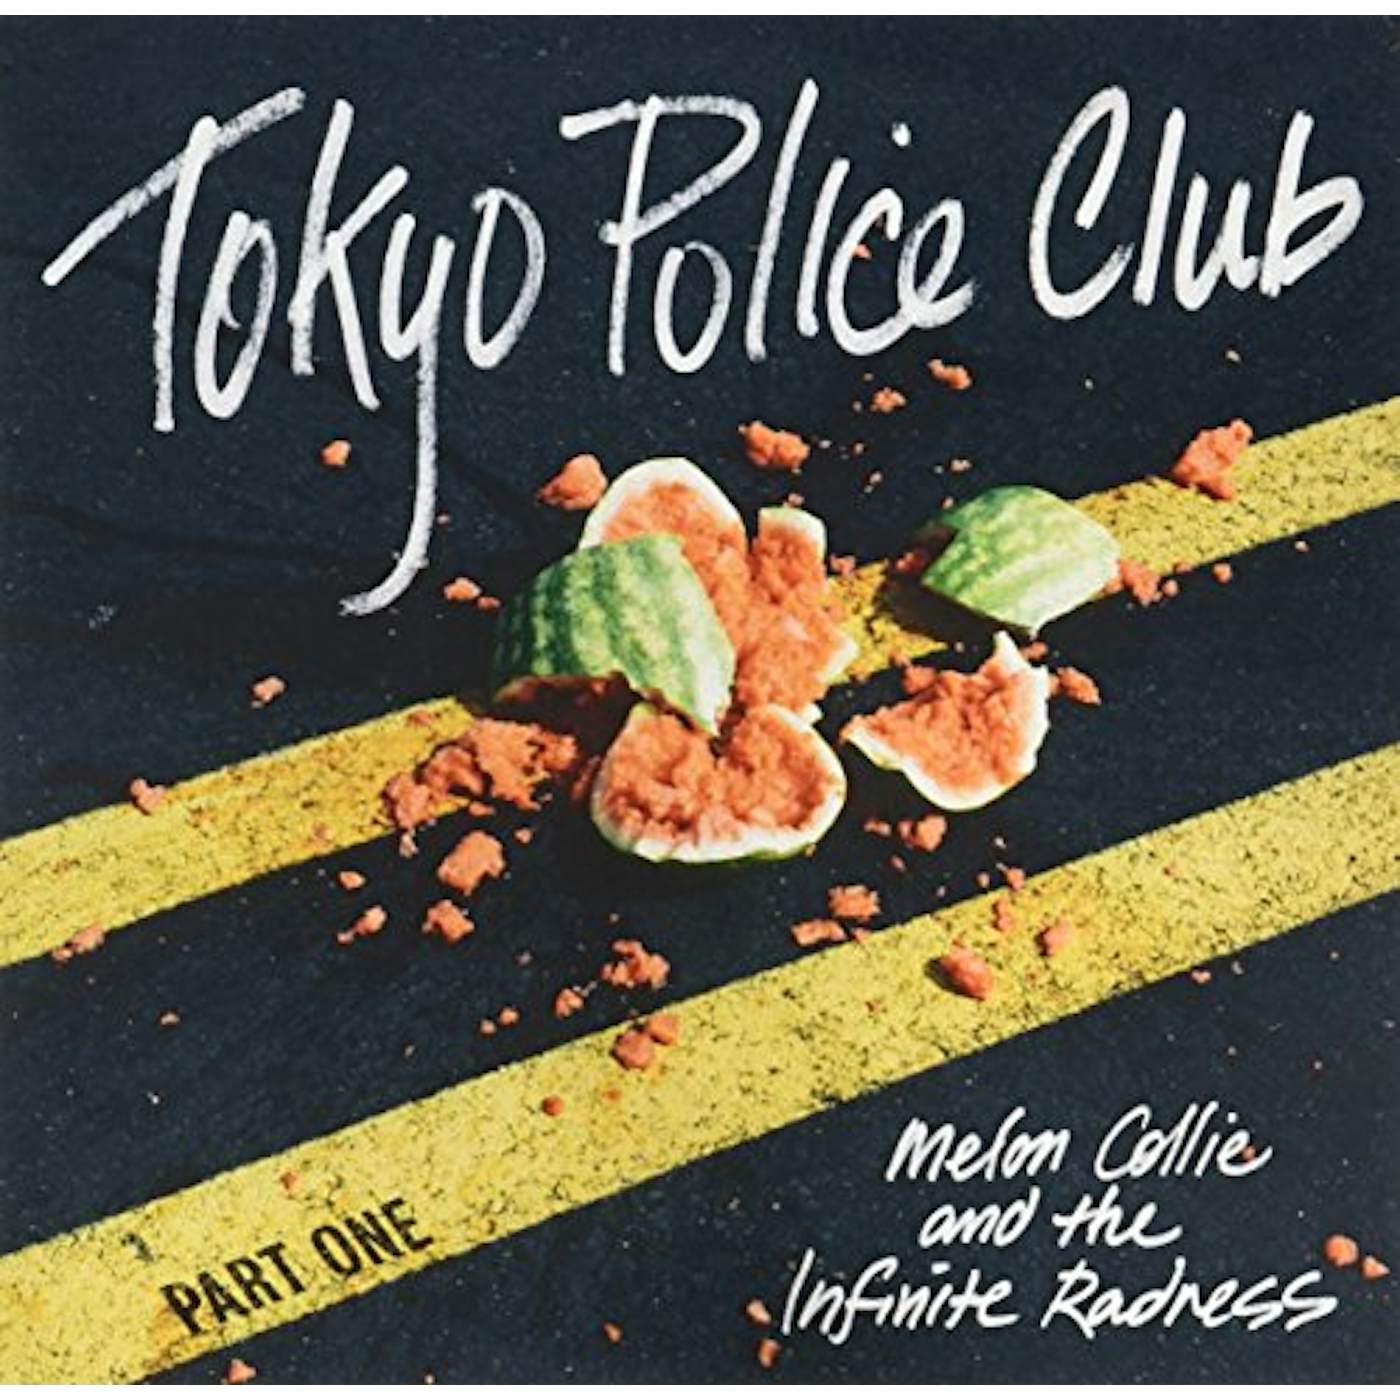 Tokyo Police Club MELON COLLIE & THE PT 1 CD